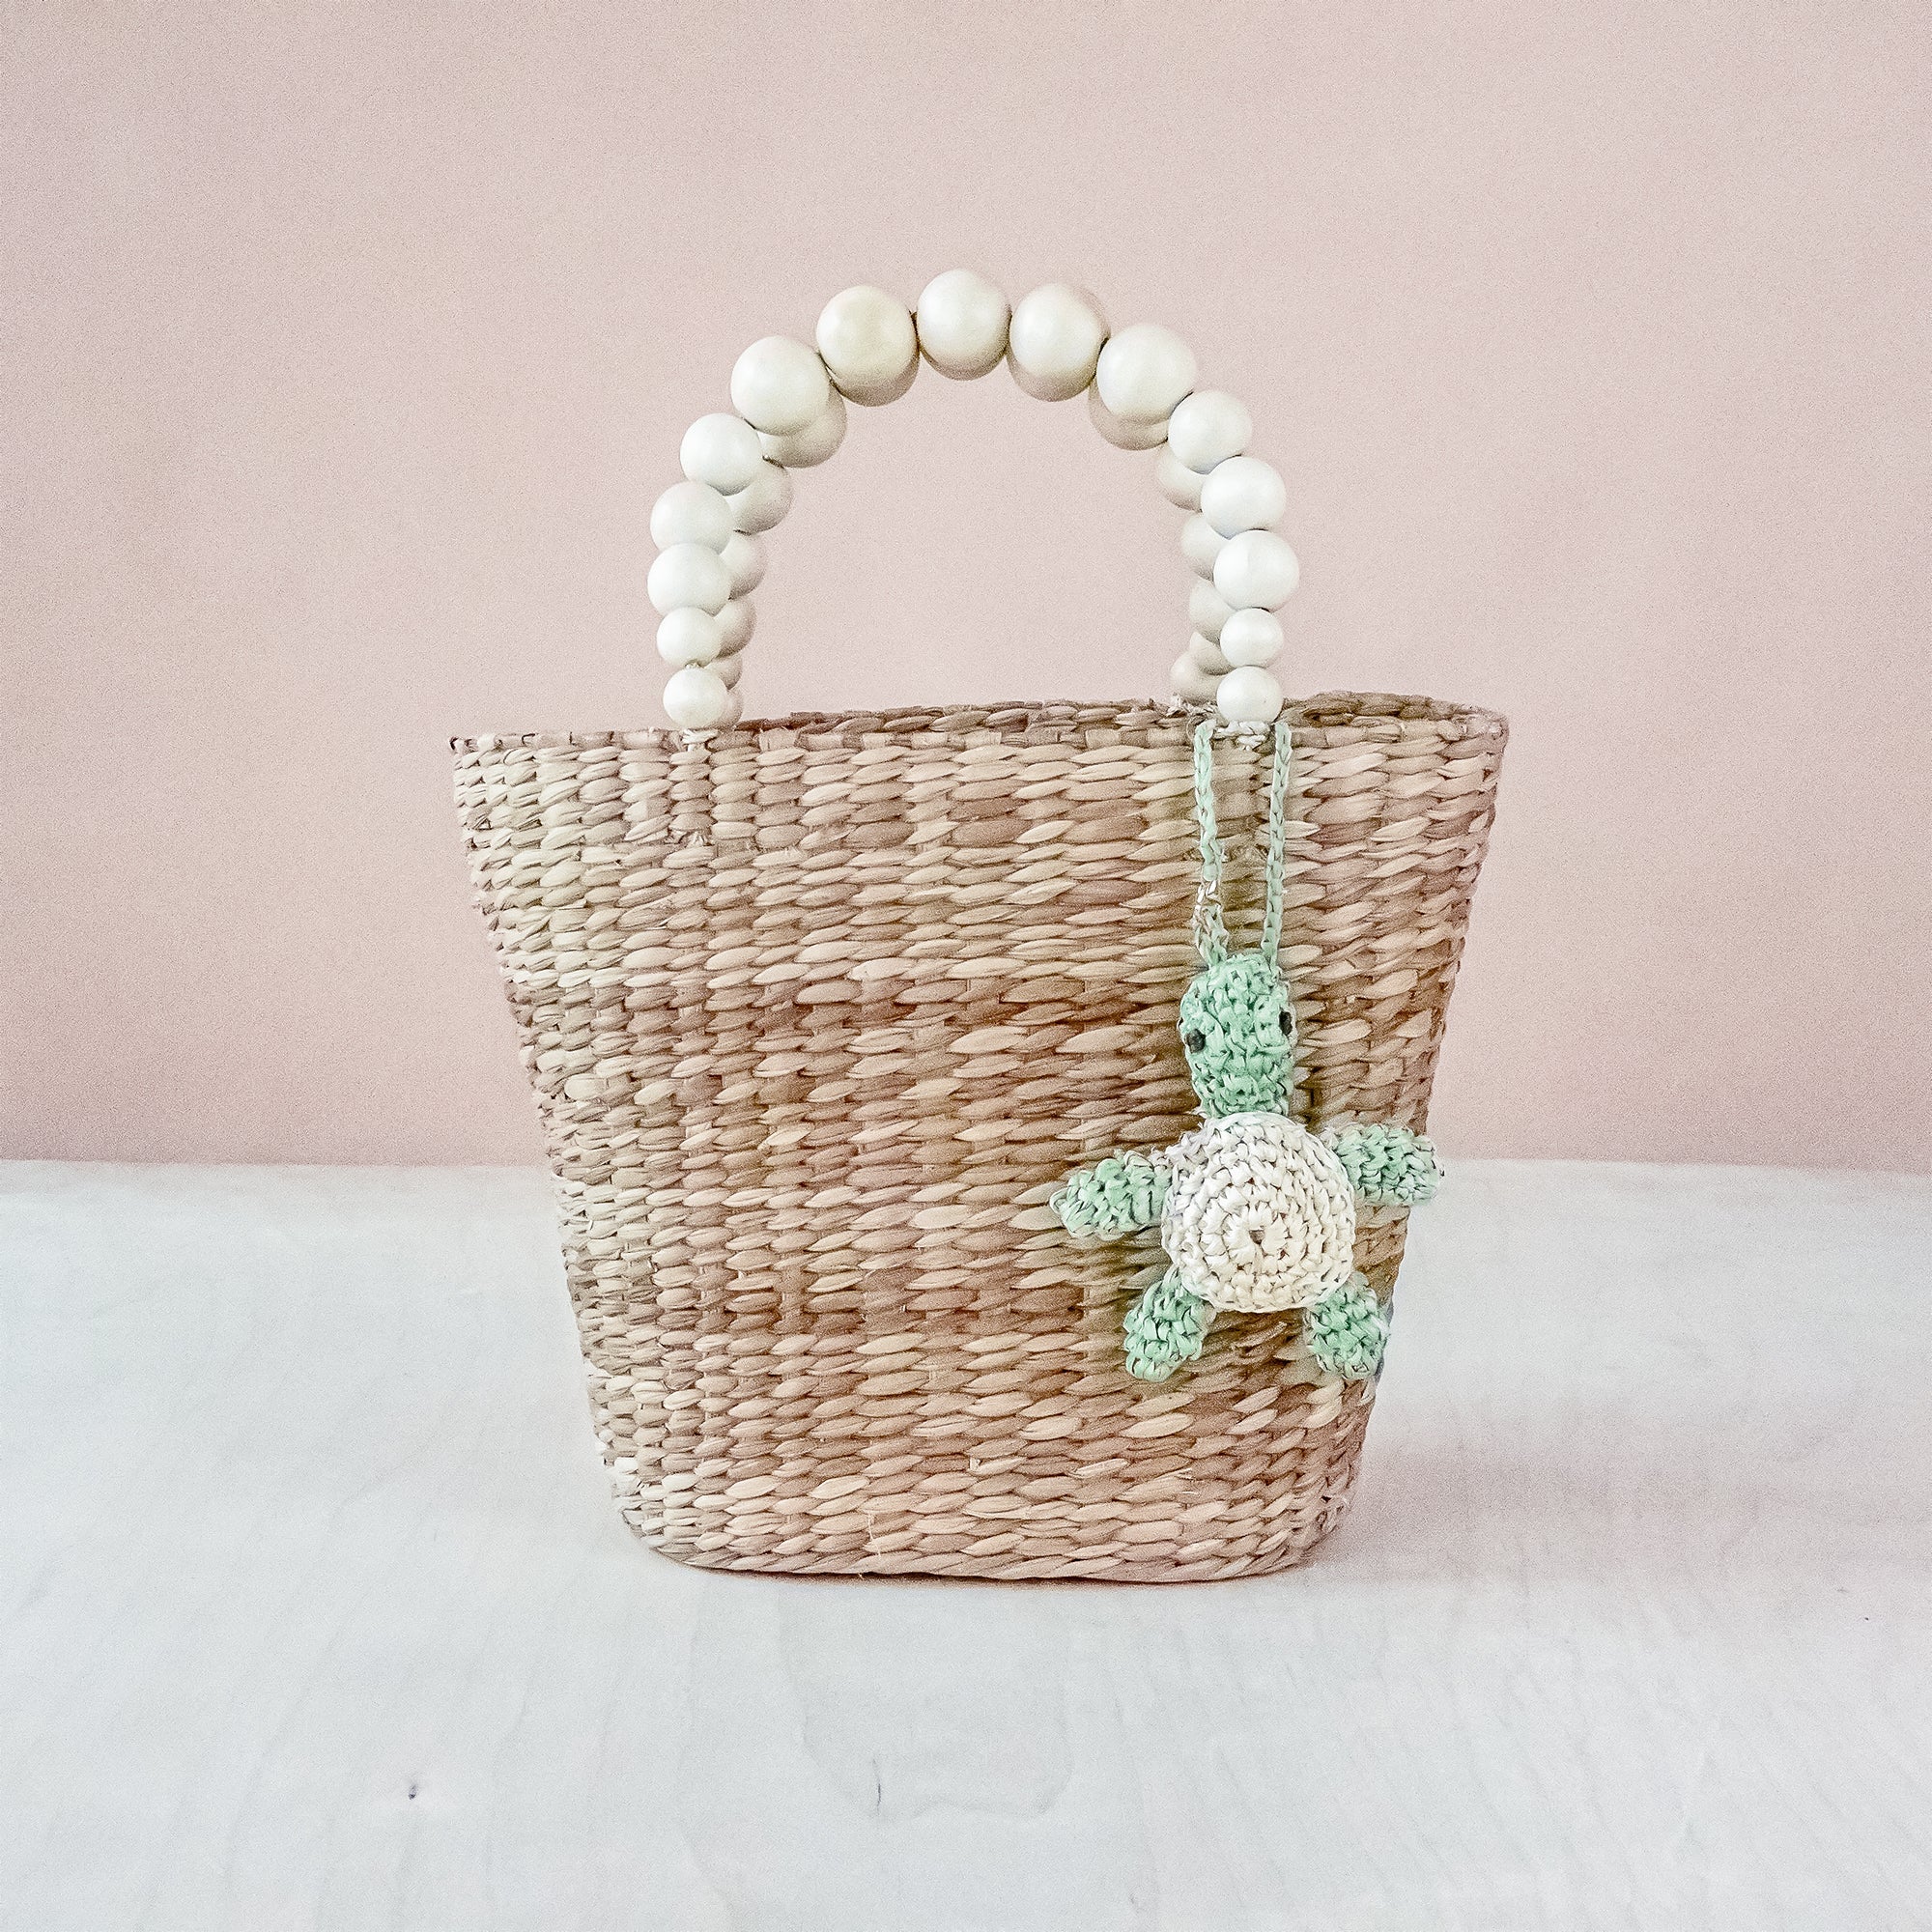 Bag charms - Turtle Bag Charm - Crochet Animal Keychains | LIKHA - LIKHÂ